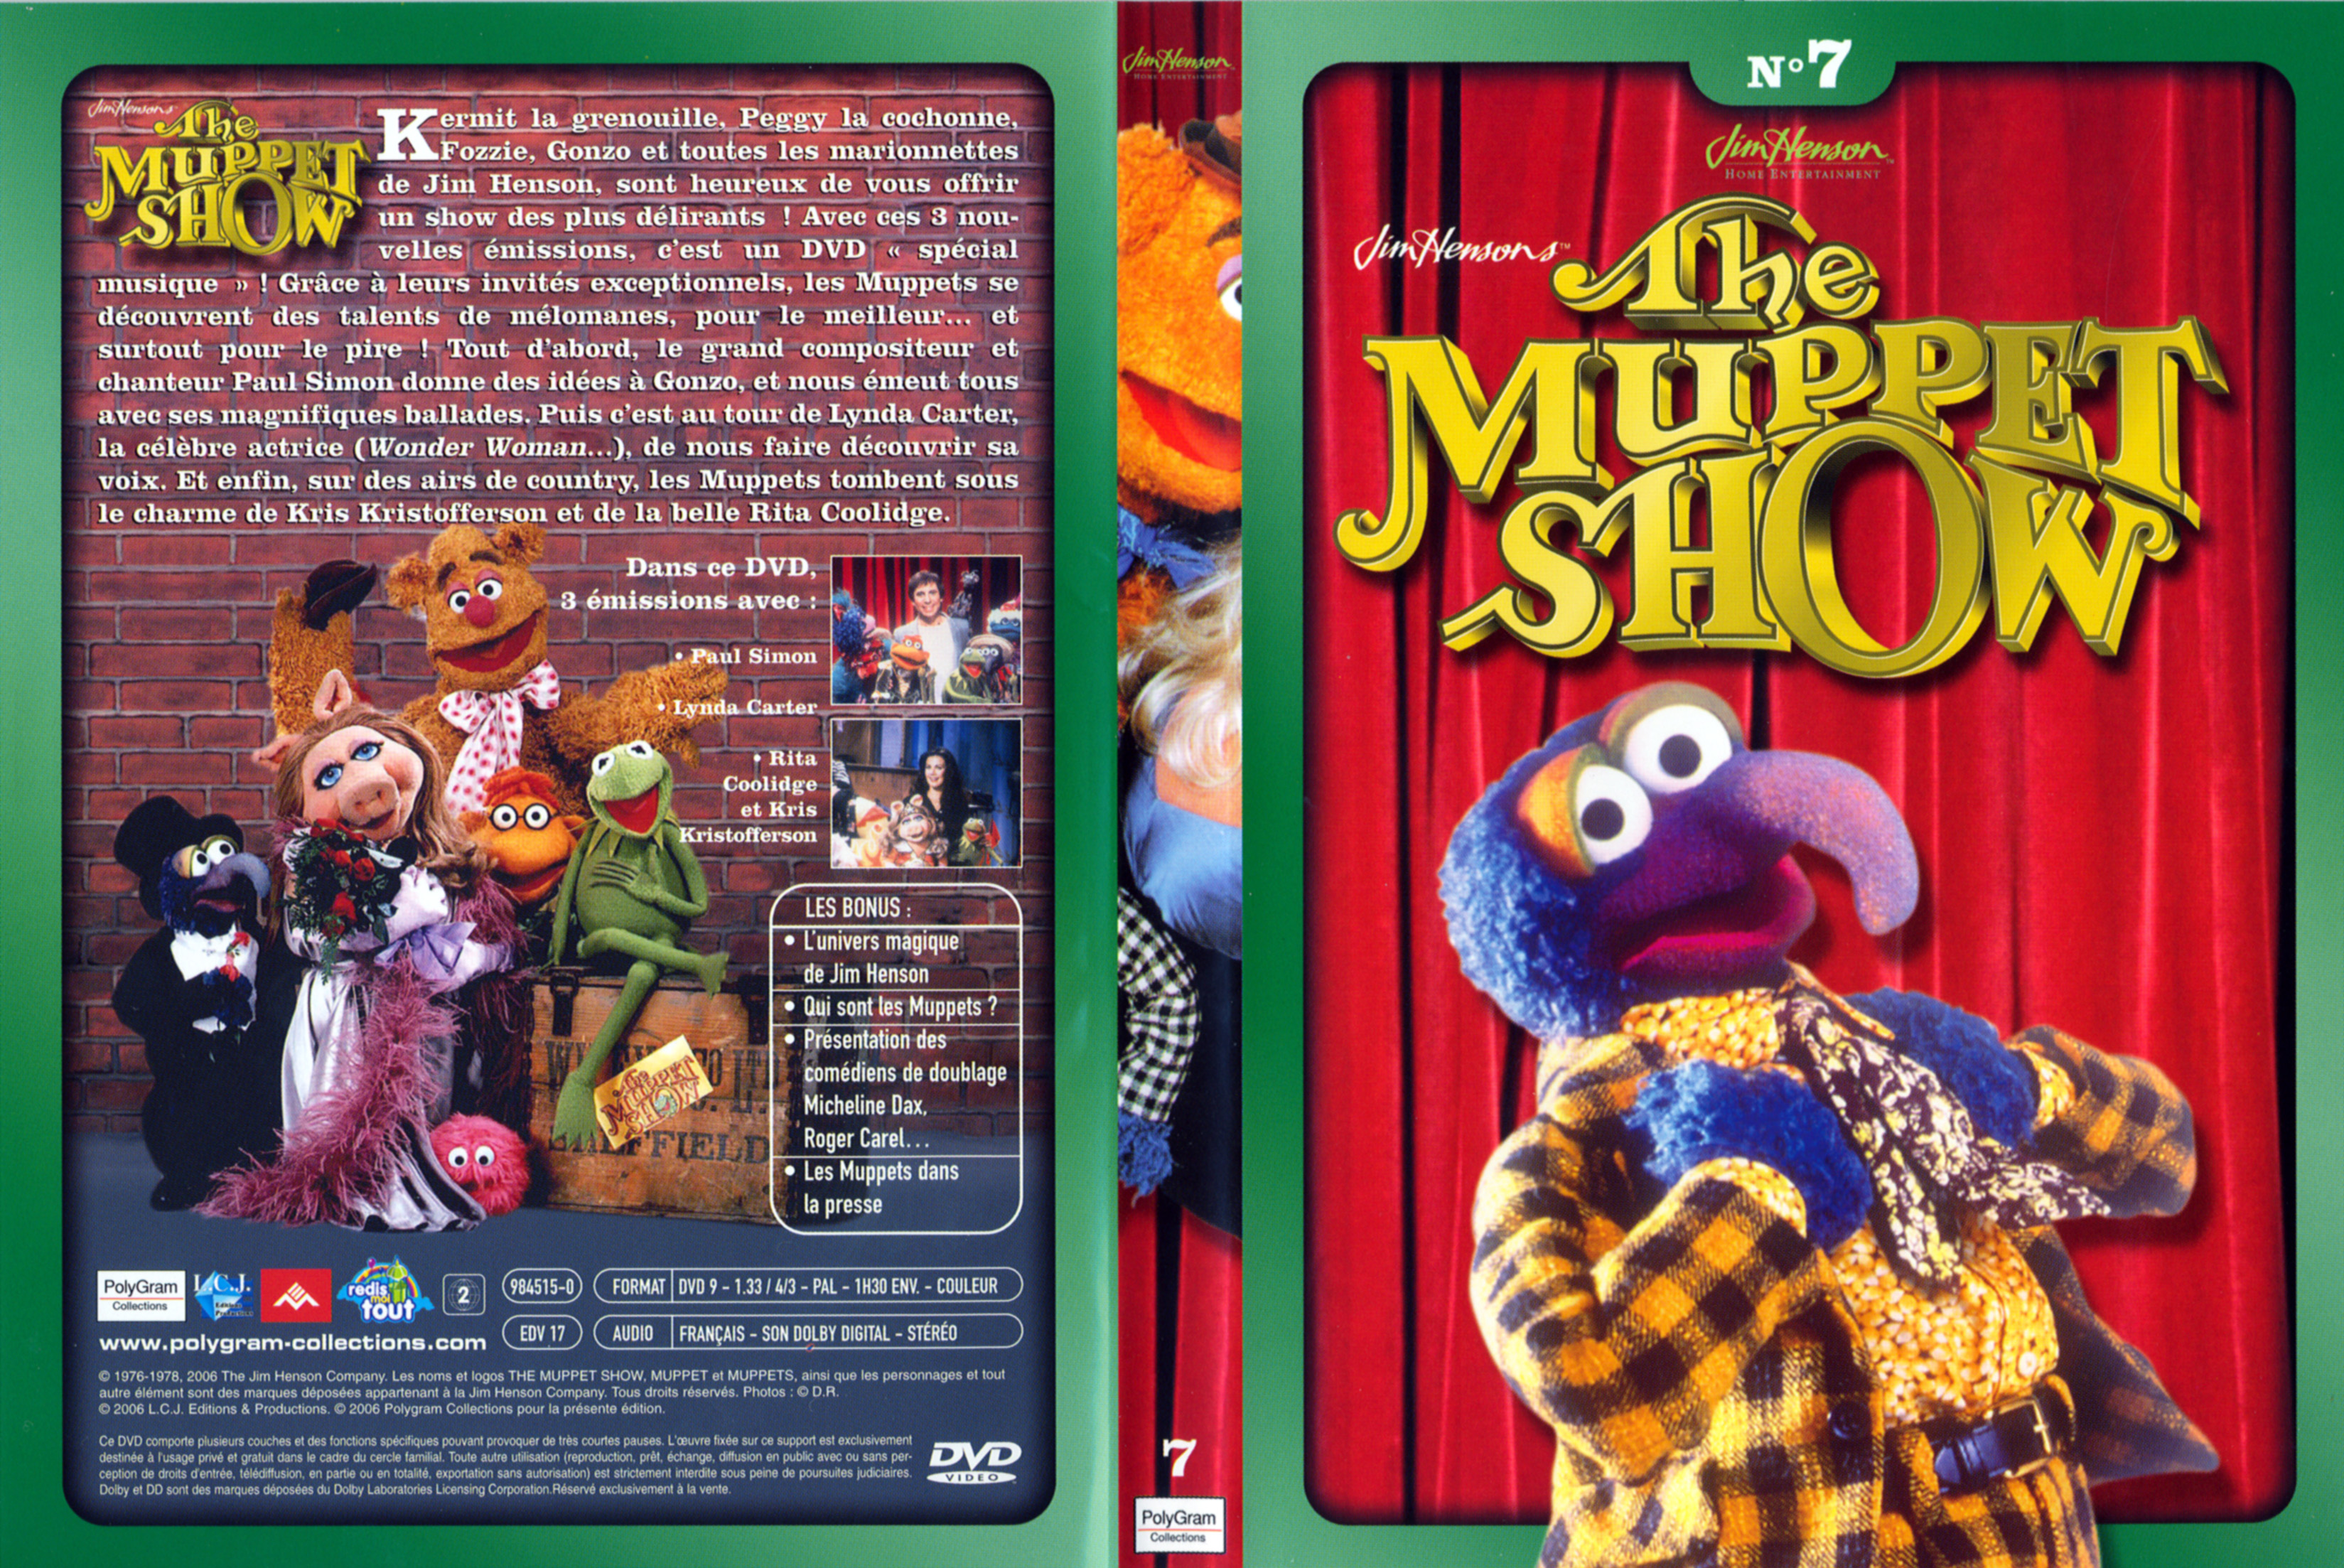 Jaquette DVD The muppet show vol 7